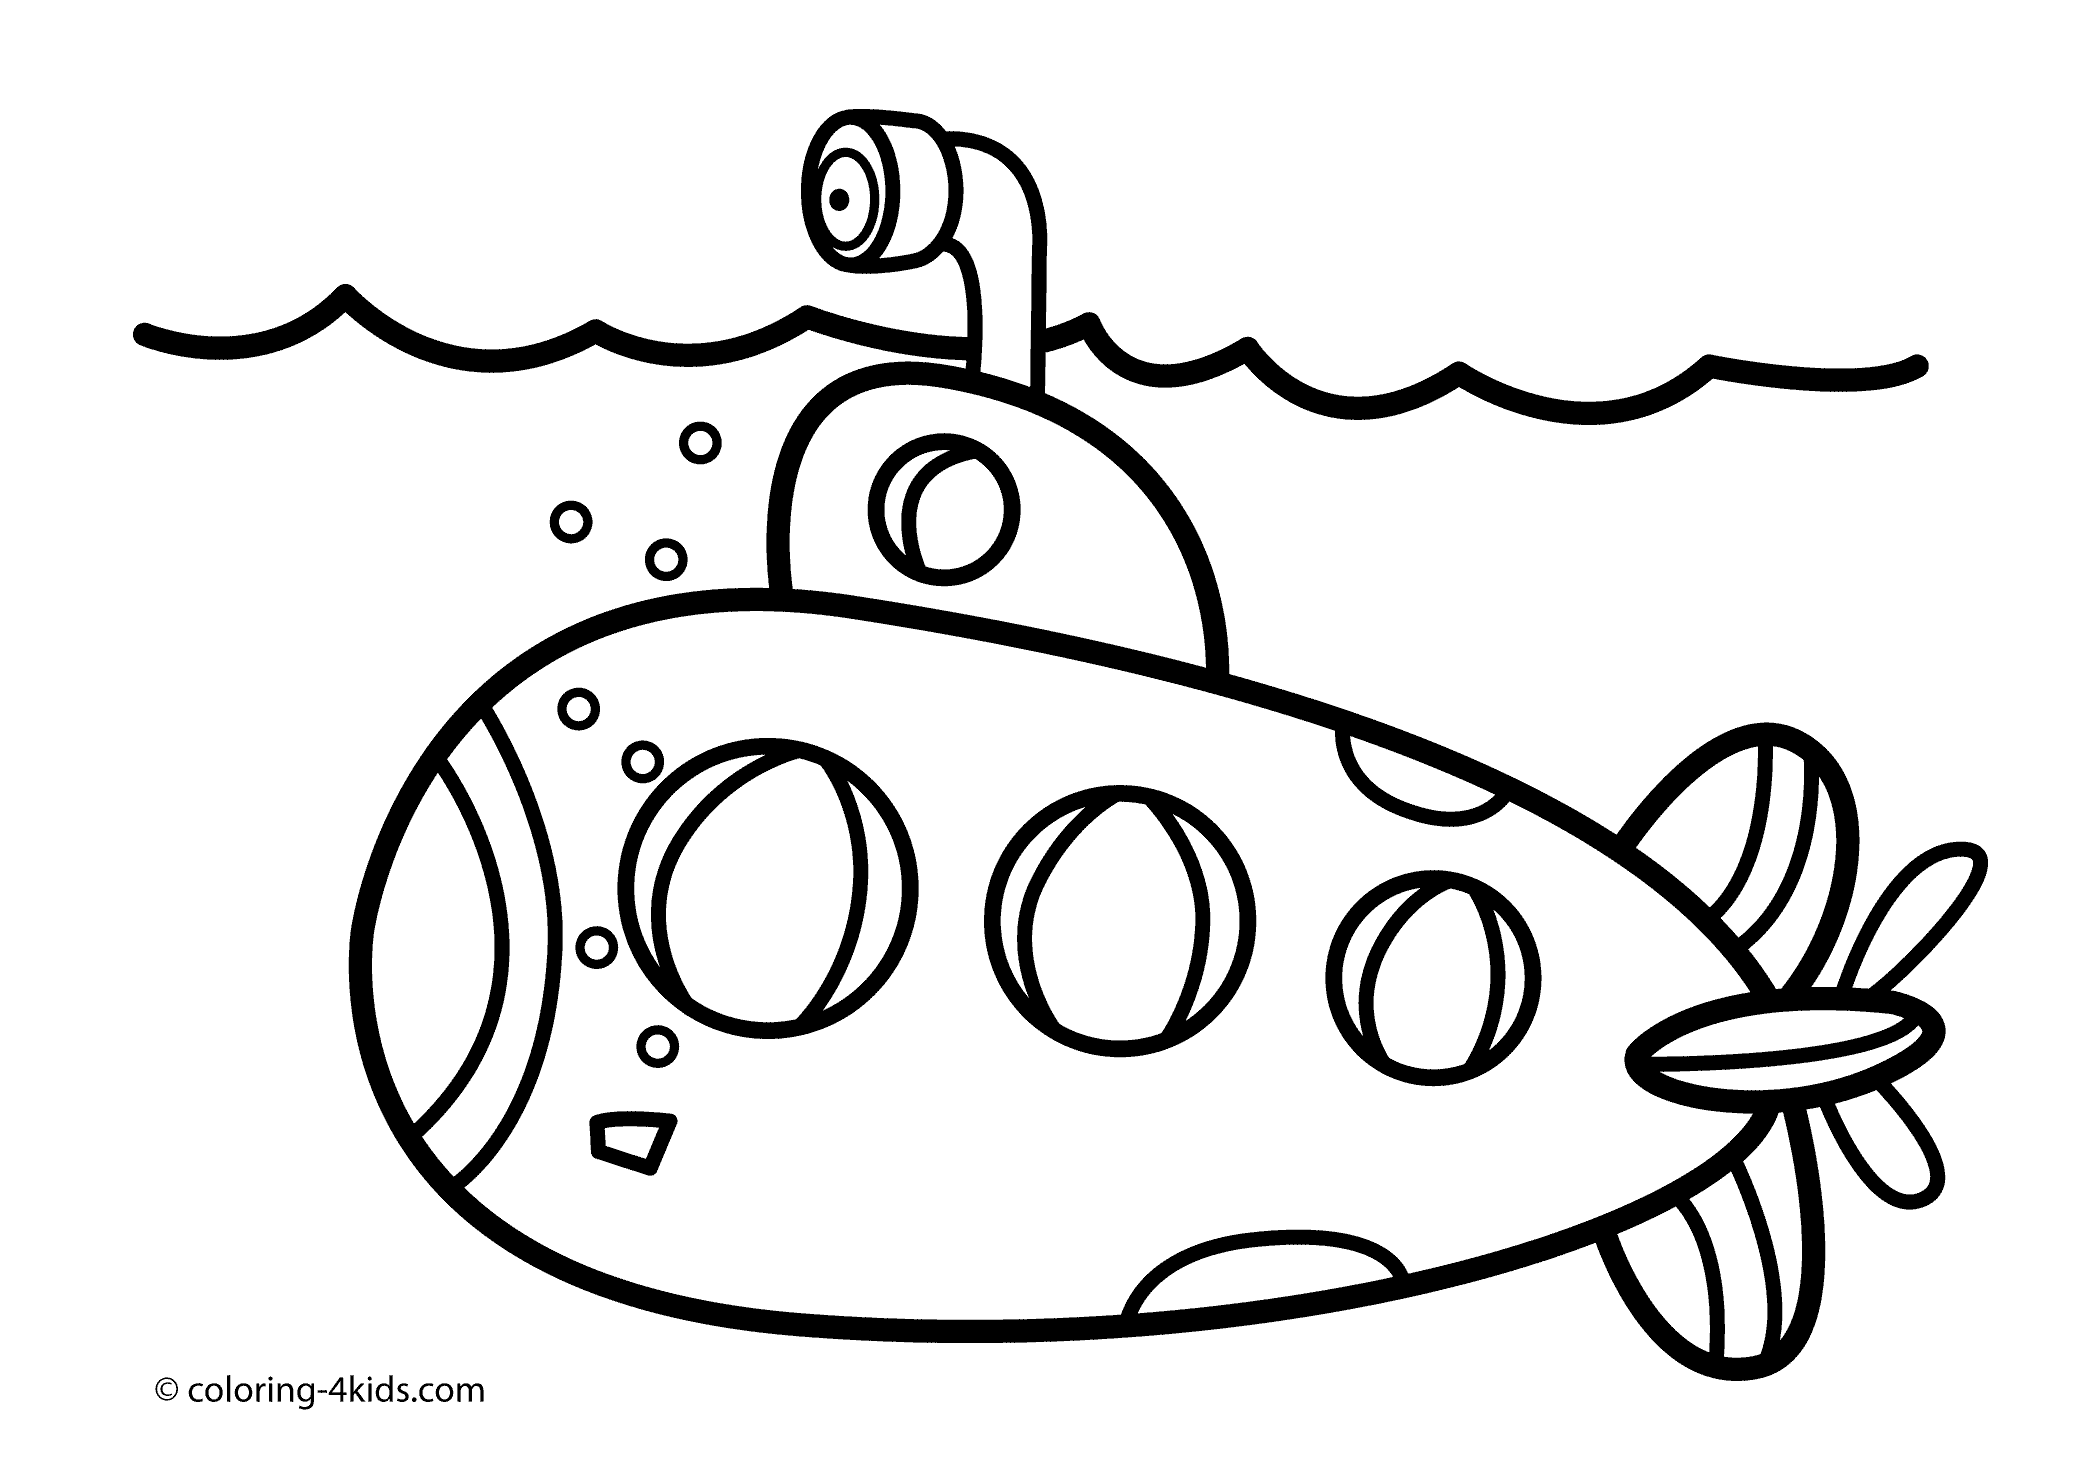 Dibujo para colorear: Submarine (Transporte) #137695 - Dibujos para Colorear e Imprimir Gratis